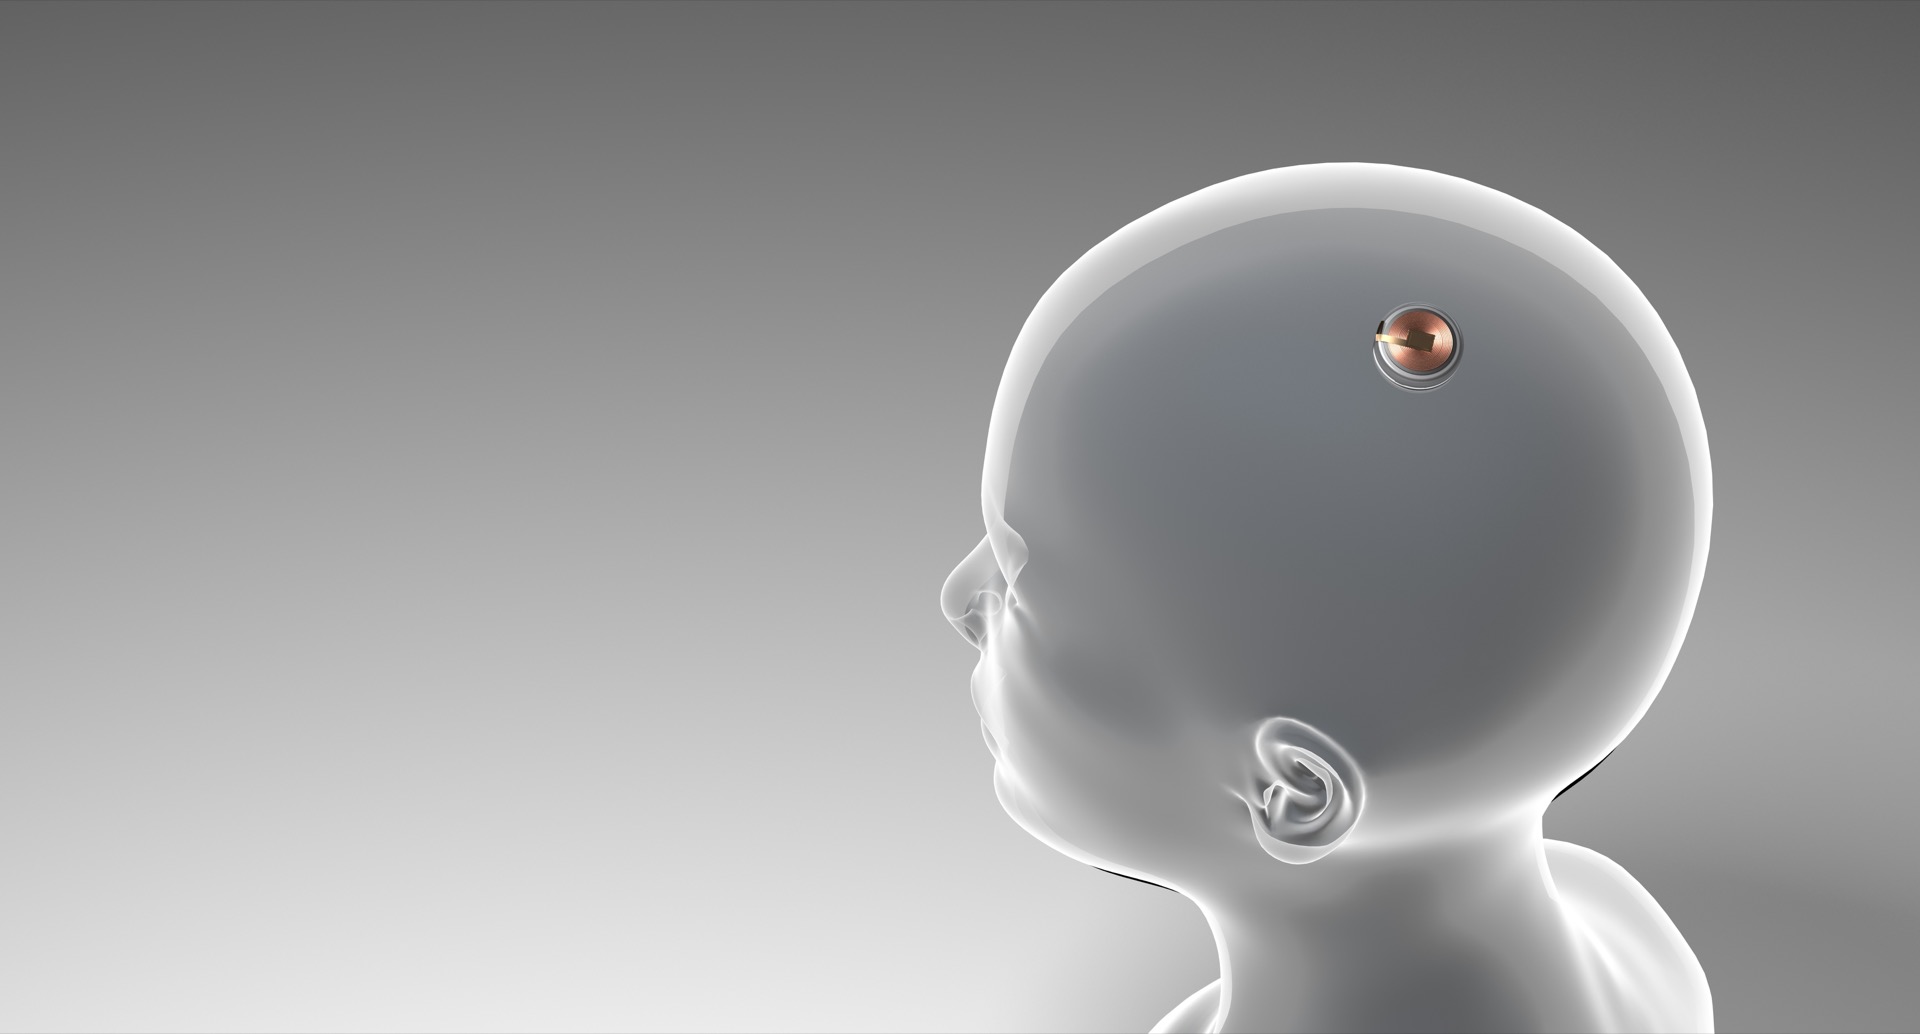 Autorizan a empresa de Elon Musk a ensayar implantes cerebrales en humanos